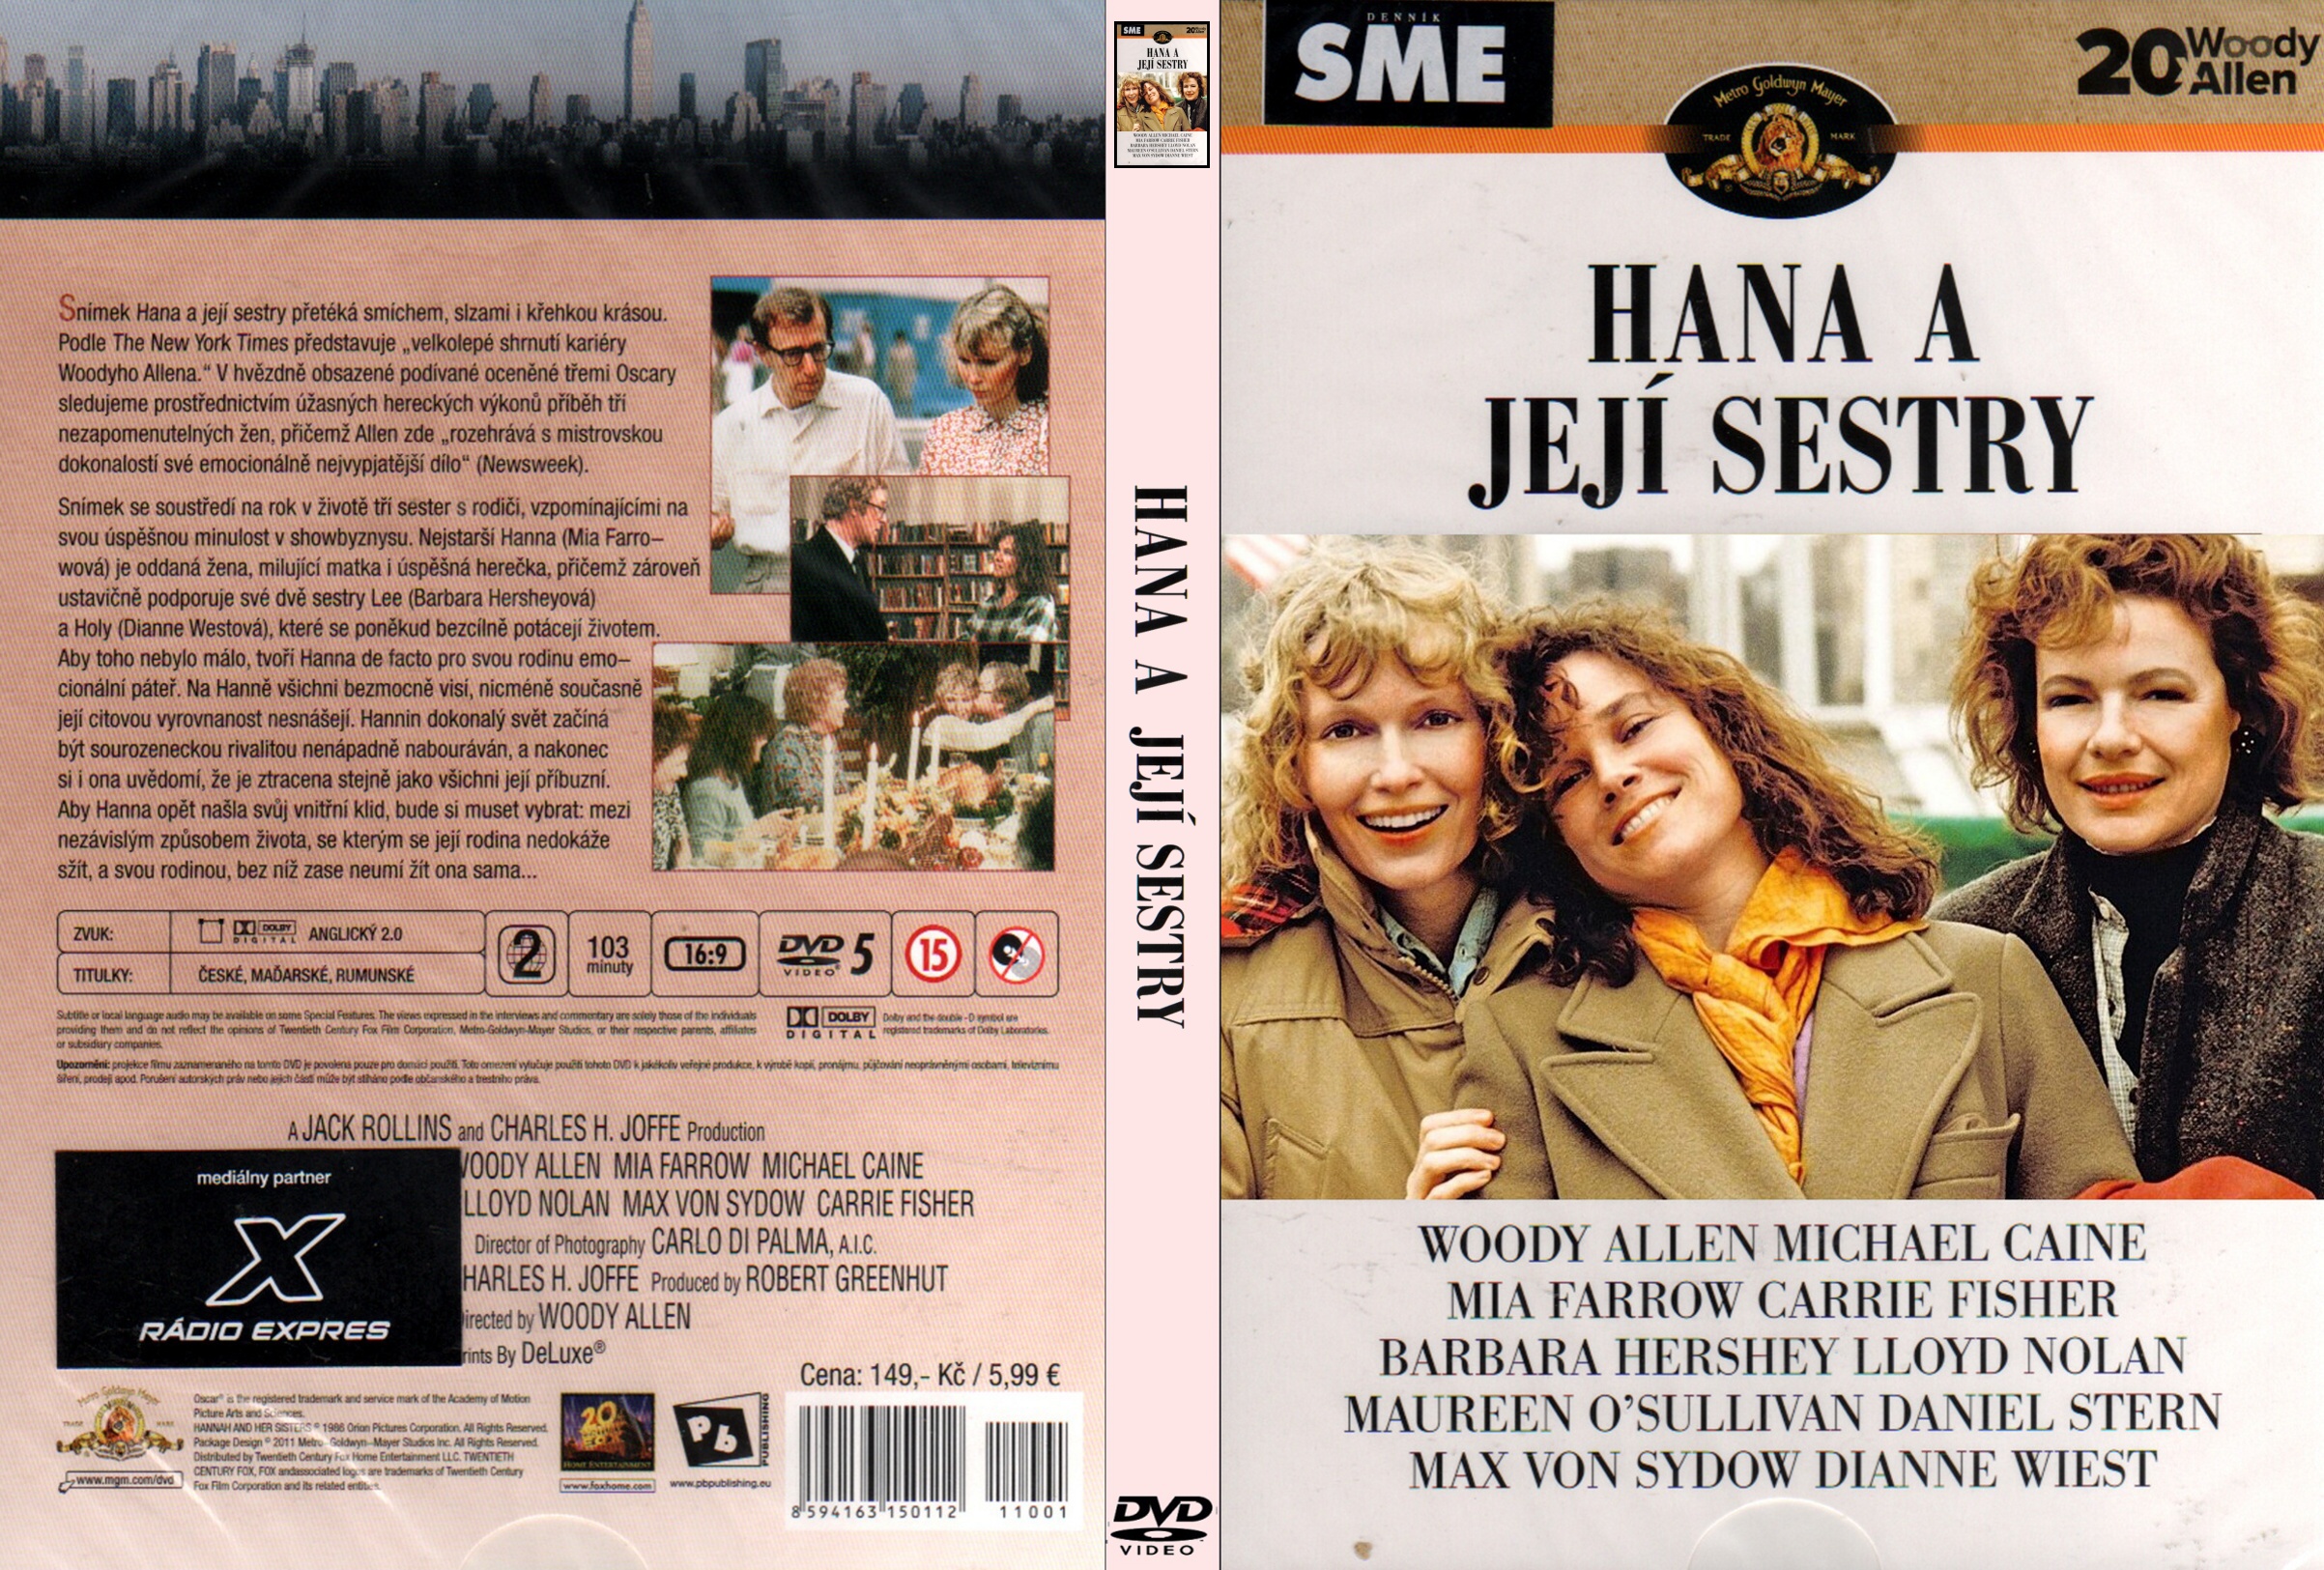 She sister перевод. Hannah and her sisters. Ханна и ее сестры 1986. DVD. Сестры. Ханна и её сестры Hannah and her sisters, 1986 Барбара Херши — Lee.